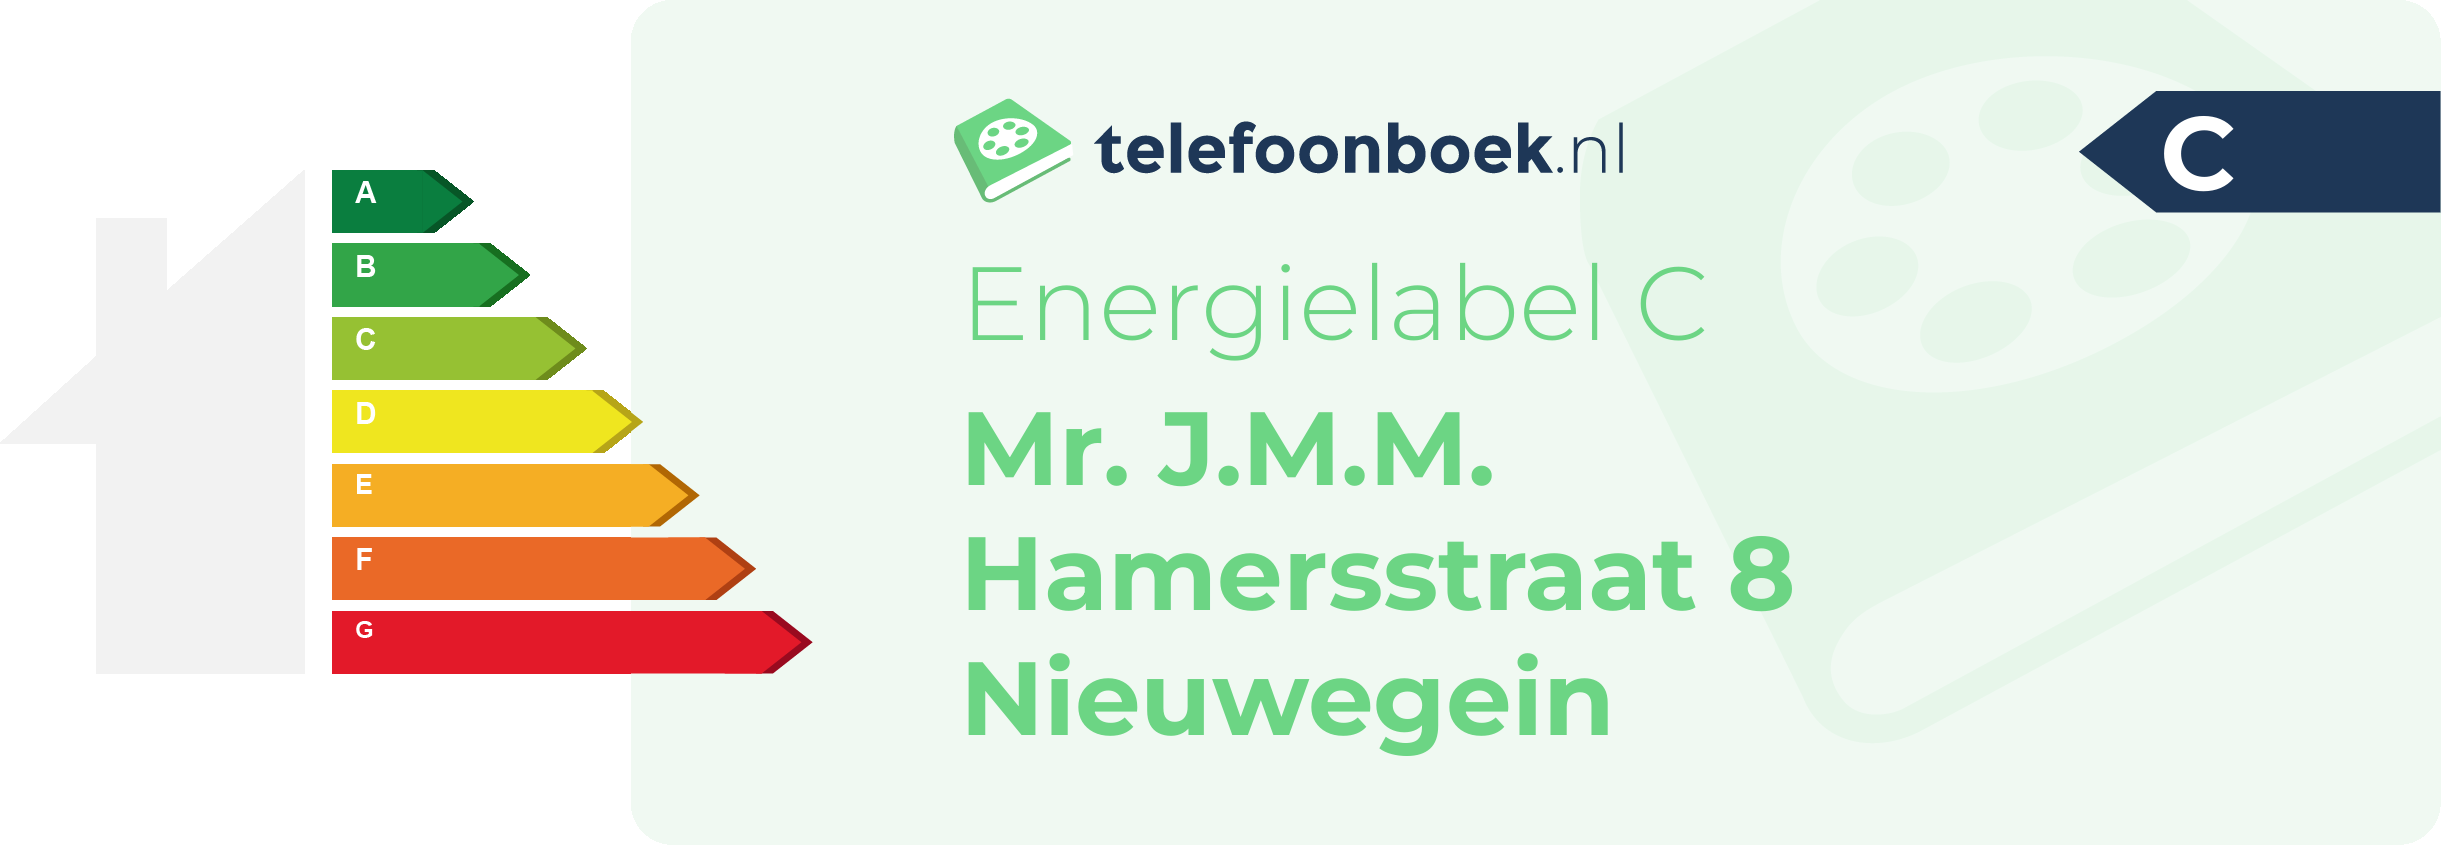 Energielabel Mr. J.M.M. Hamersstraat 8 Nieuwegein